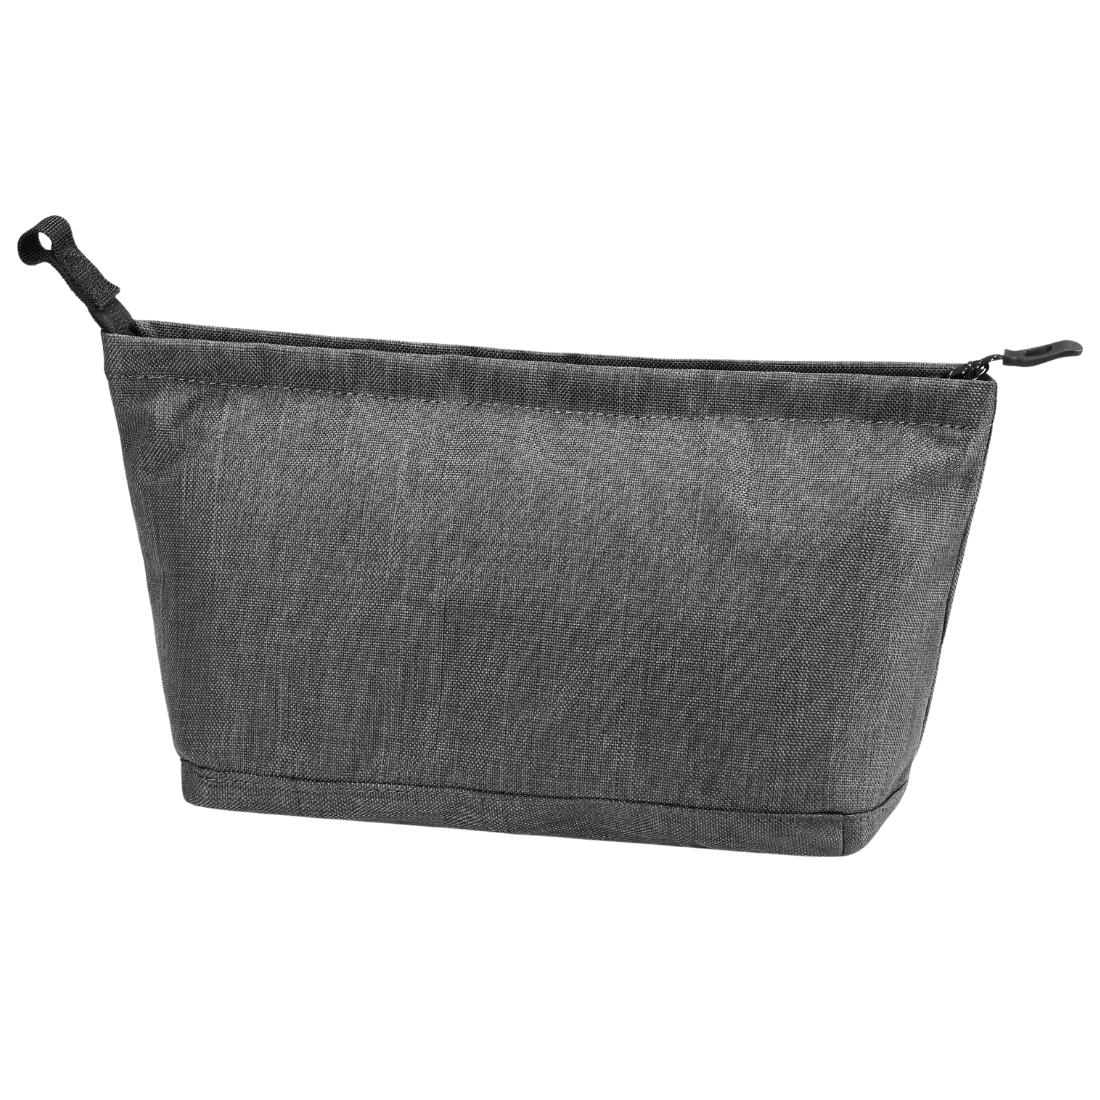 Dakine Dopp Kit Large Travel/Wash Bag - Carbon